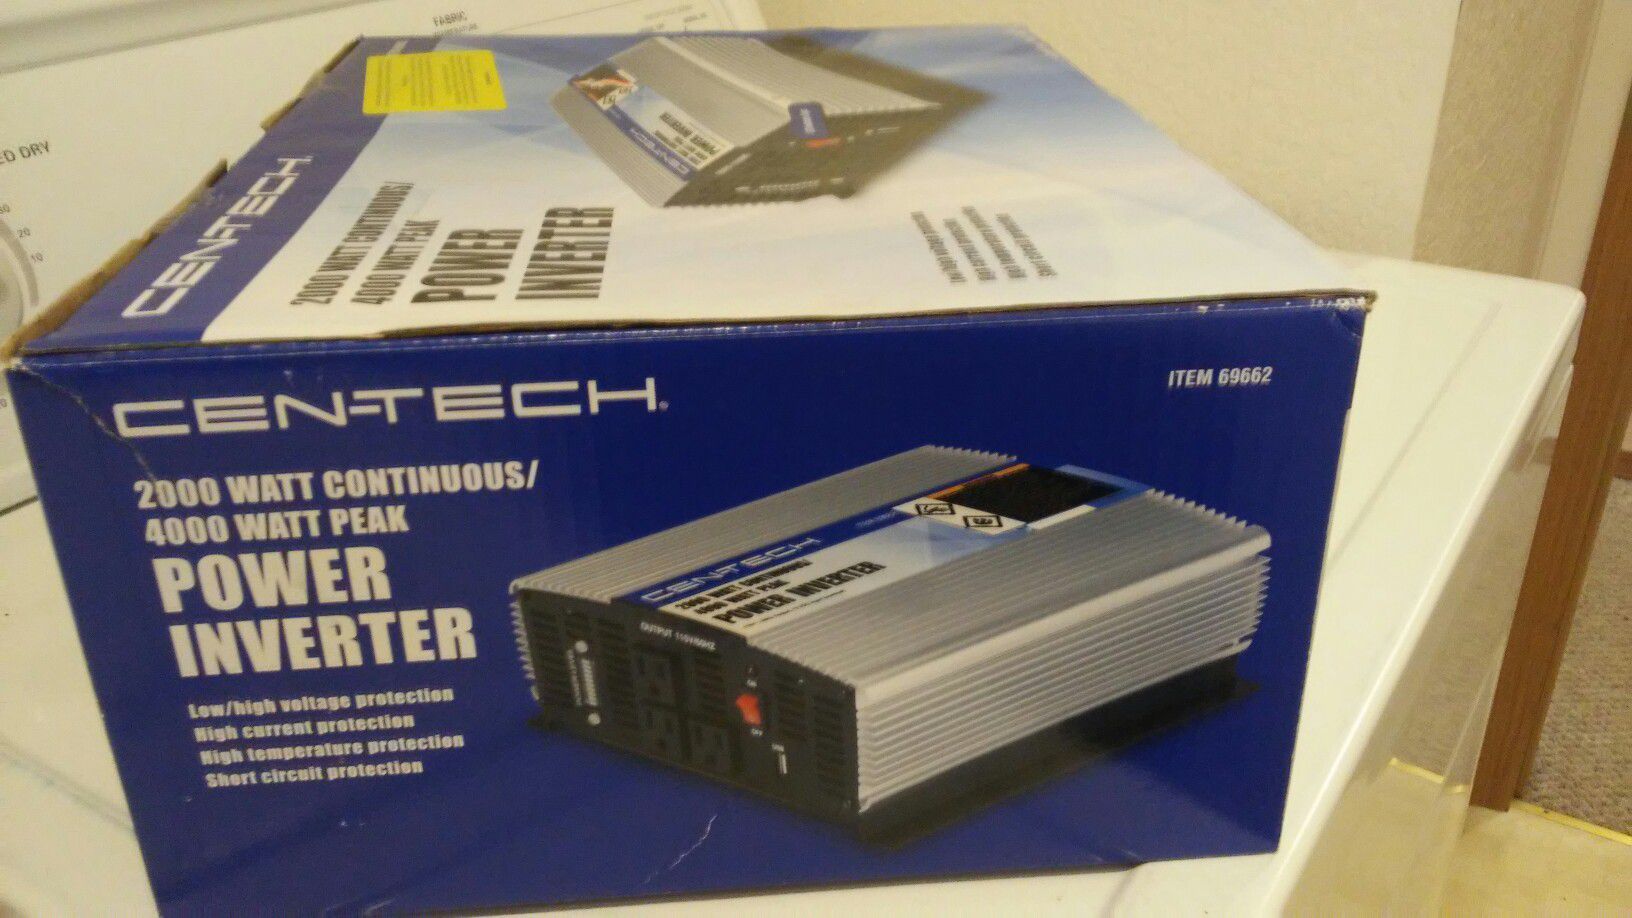 Cen-Tech Power Inverter 2000 watt continous/4000 peak